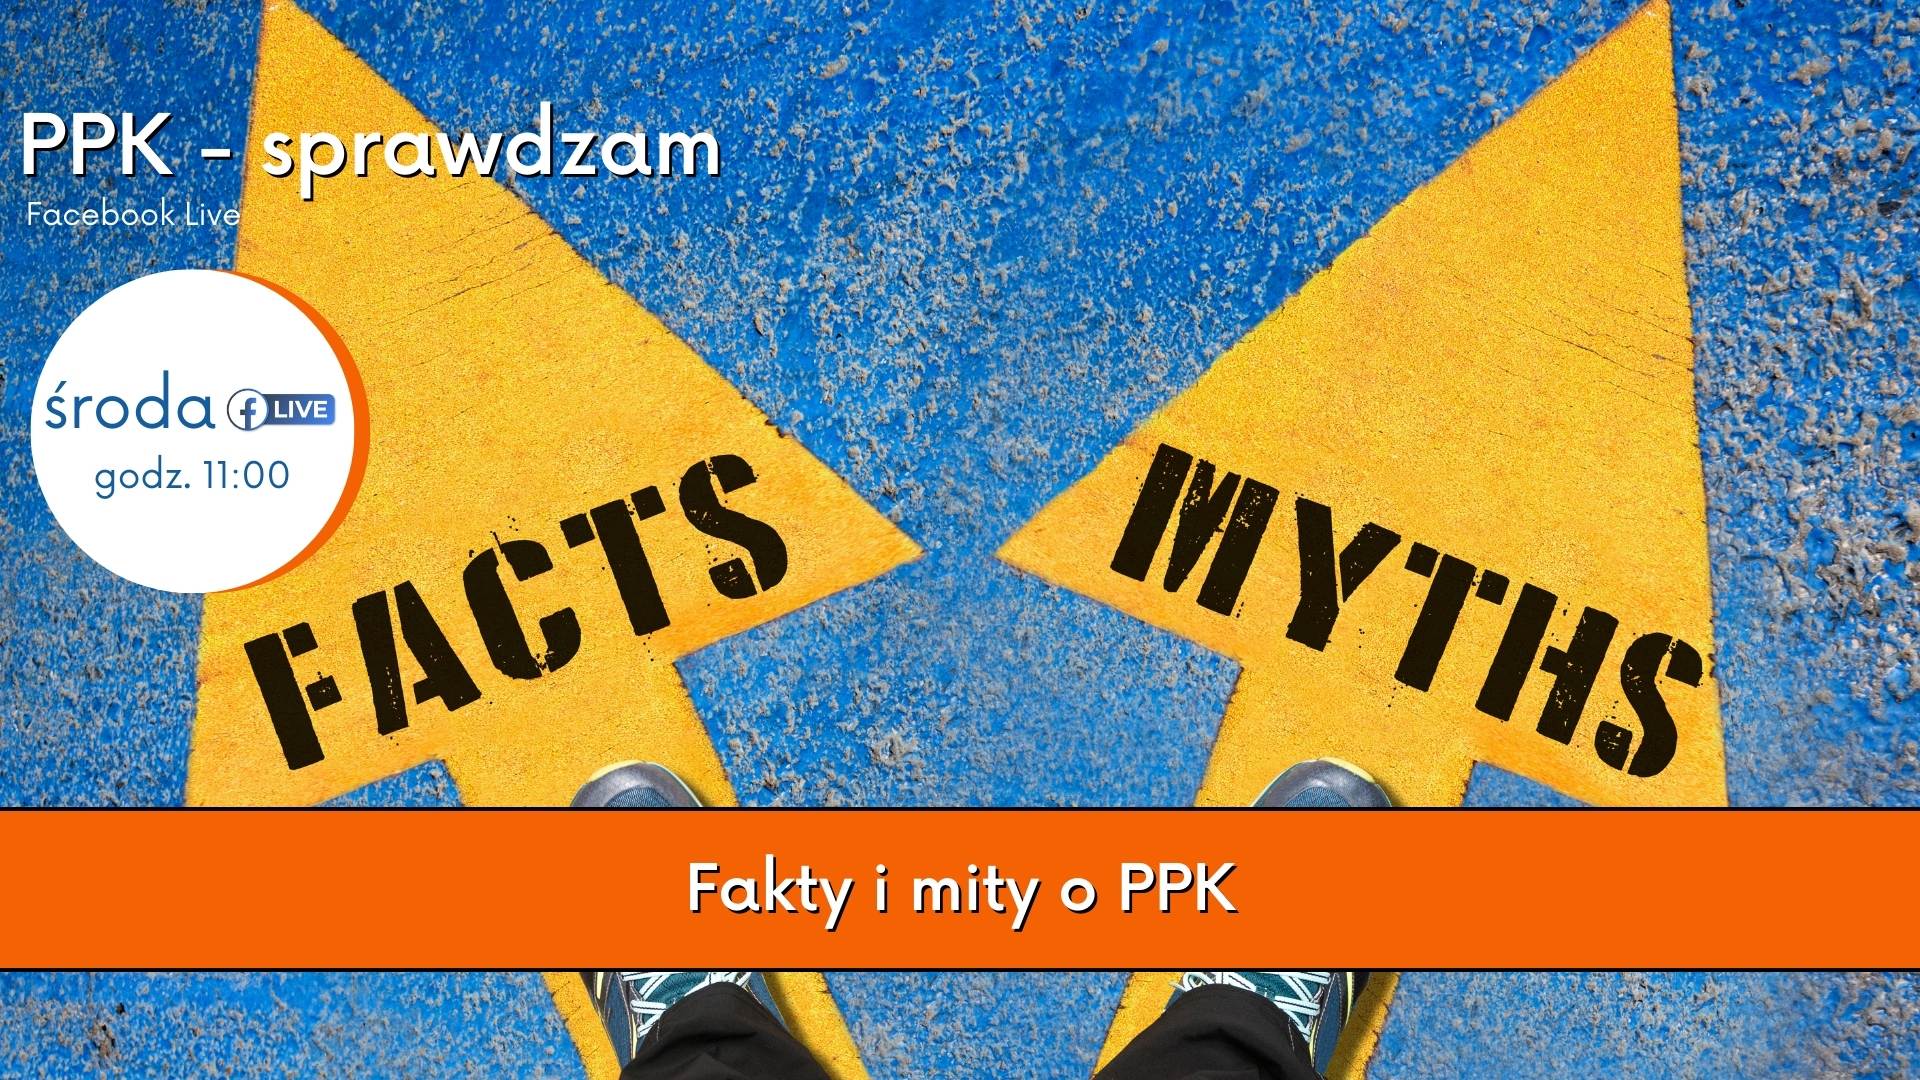 PPK – sprawdzam: Fakty i mity o PPK